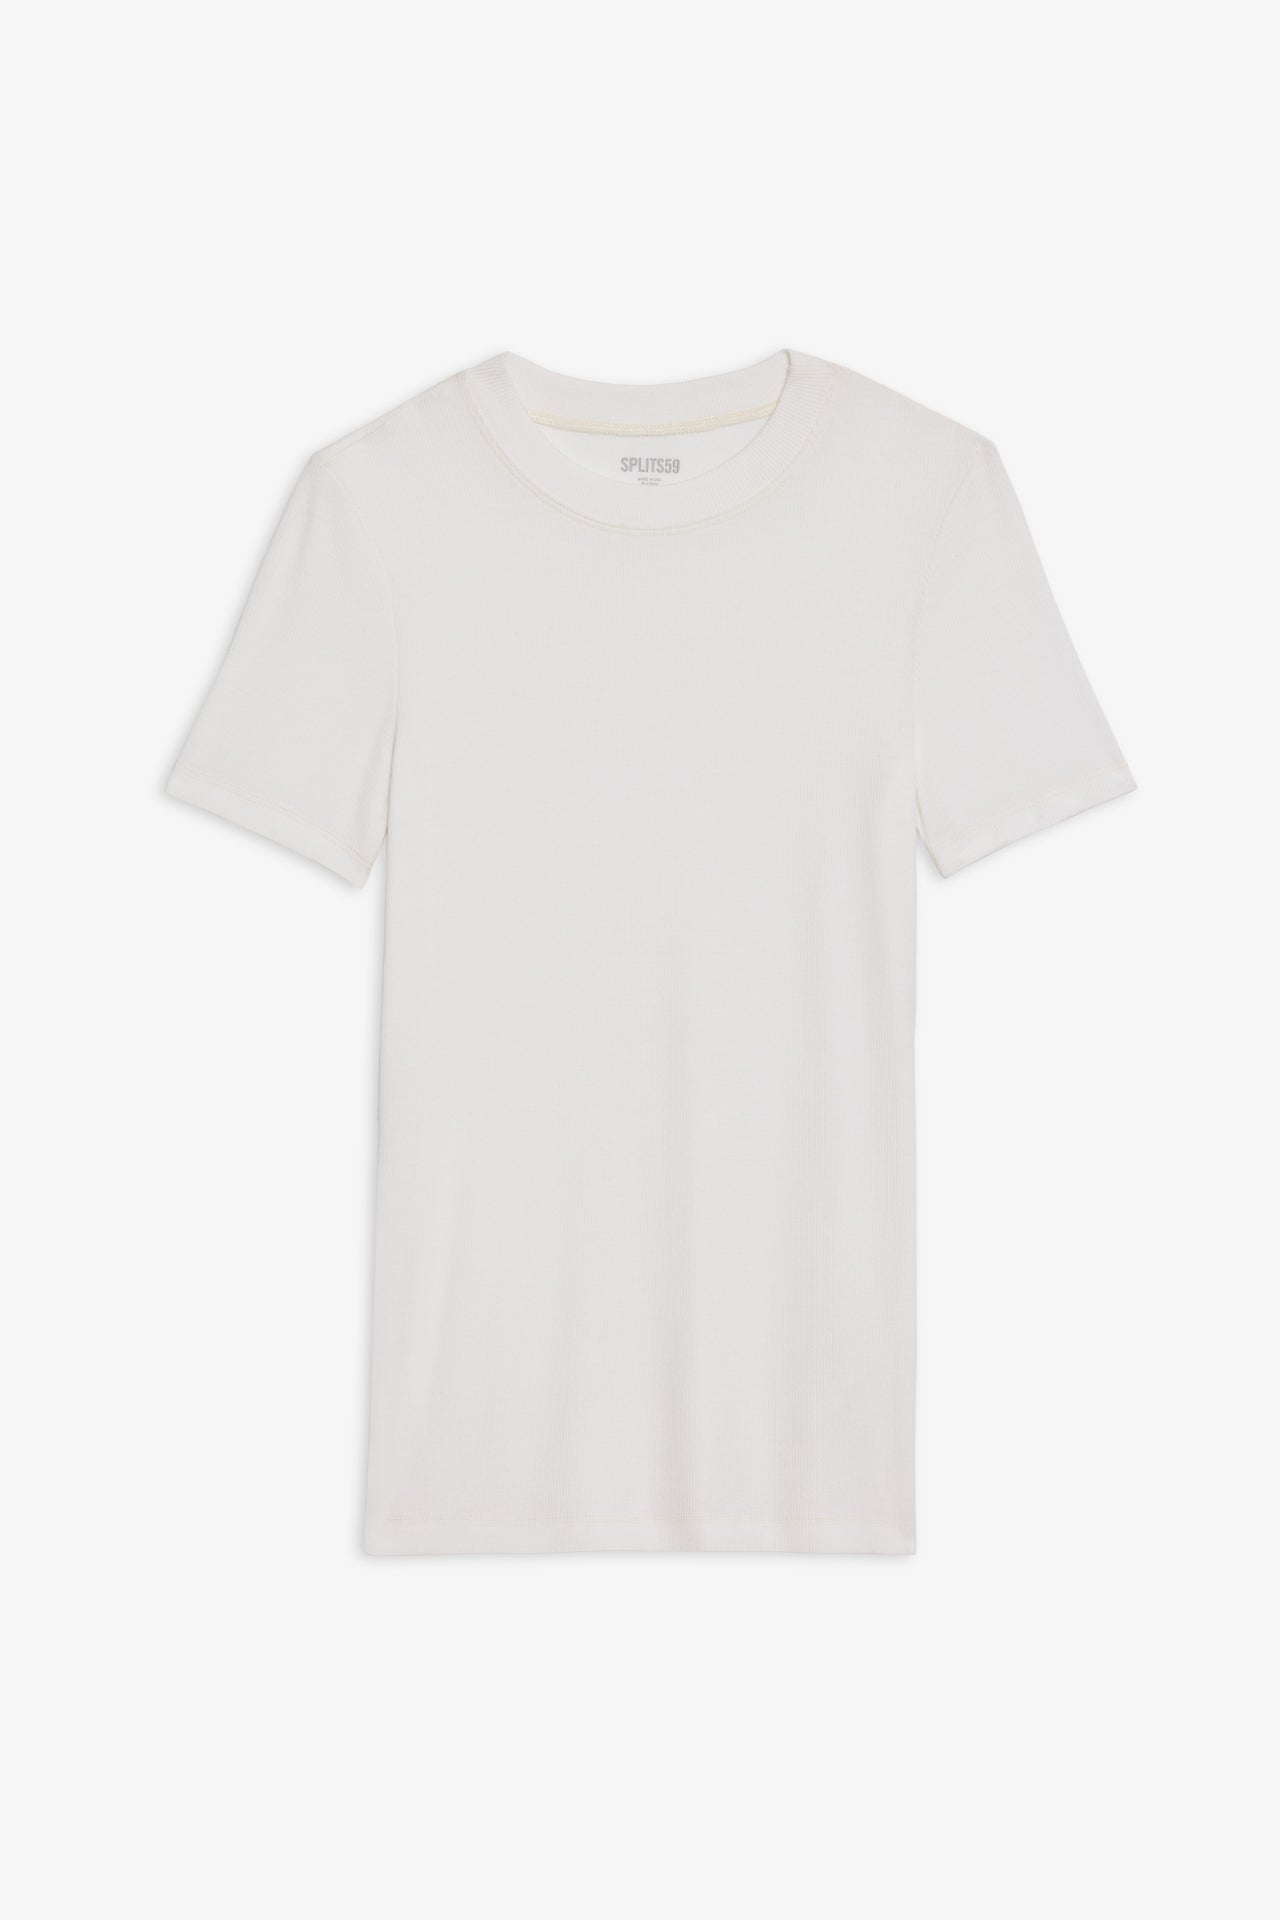 A SPLITS59 Louise Rib Short Sleeve - White gym t-shirt on a white background.